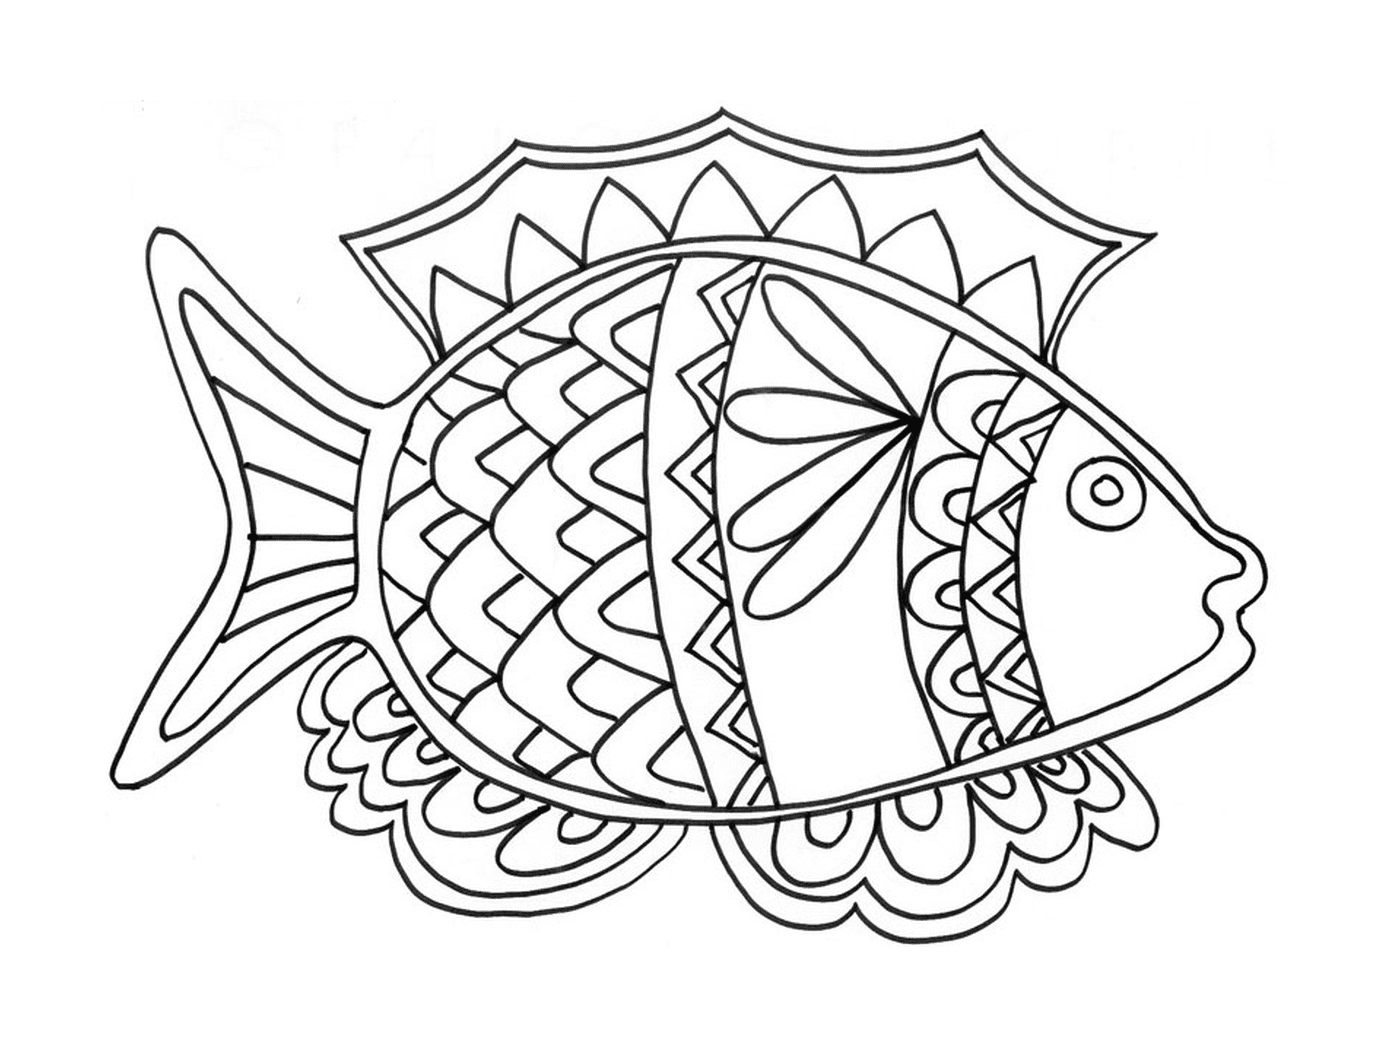  Fish April drawing 